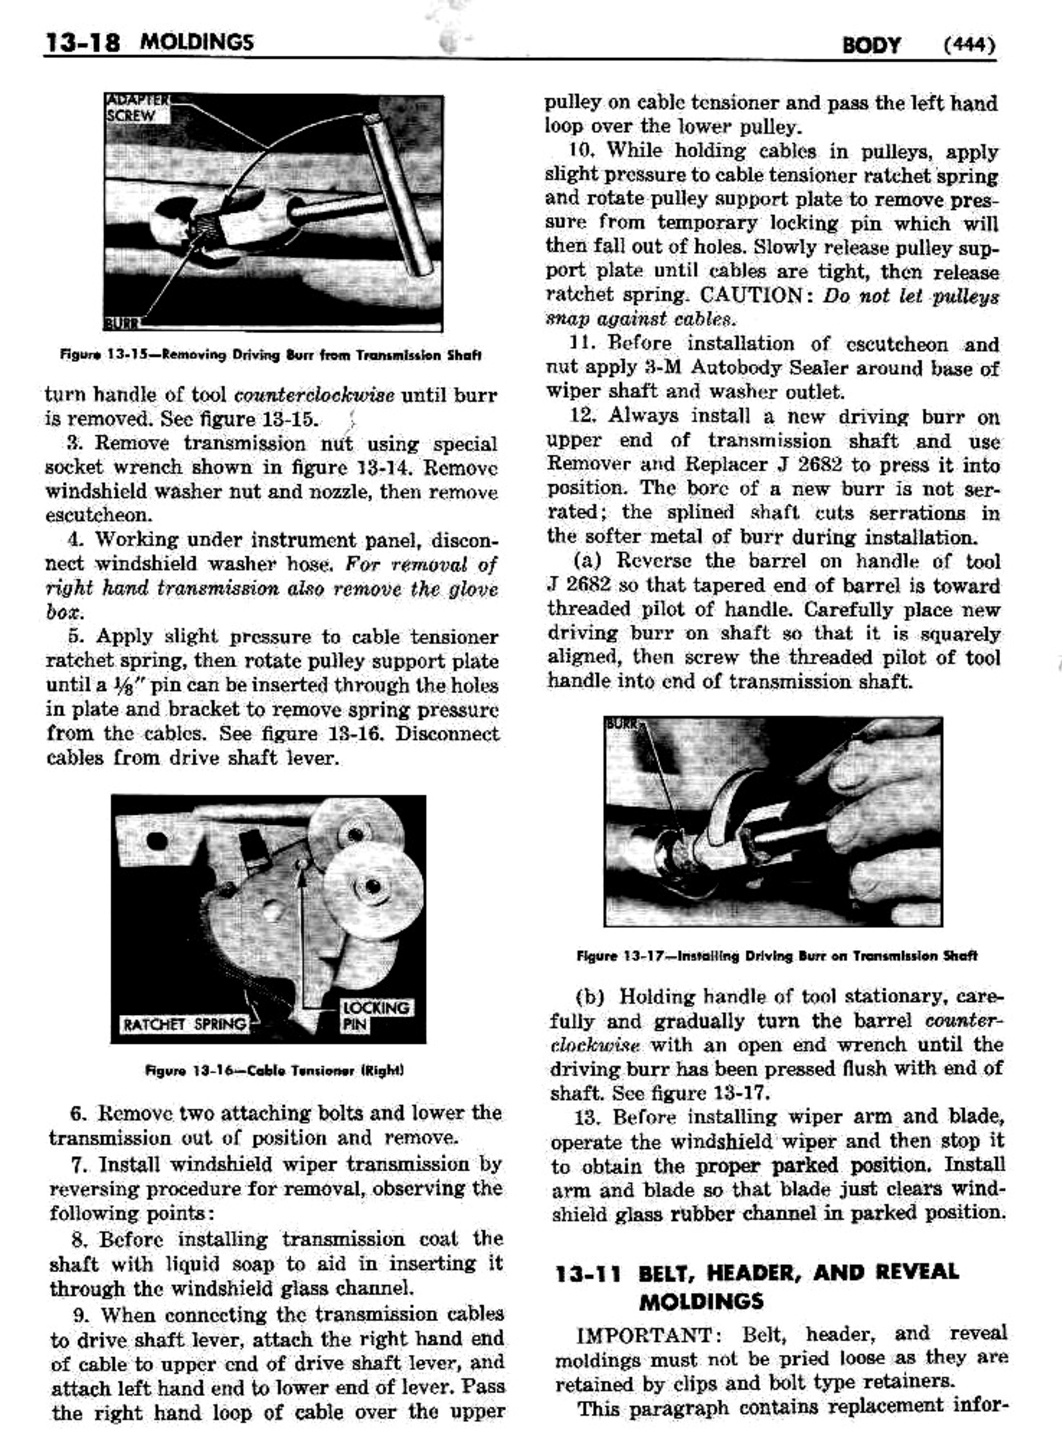 n_14 1951 Buick Shop Manual - Body-018-018.jpg